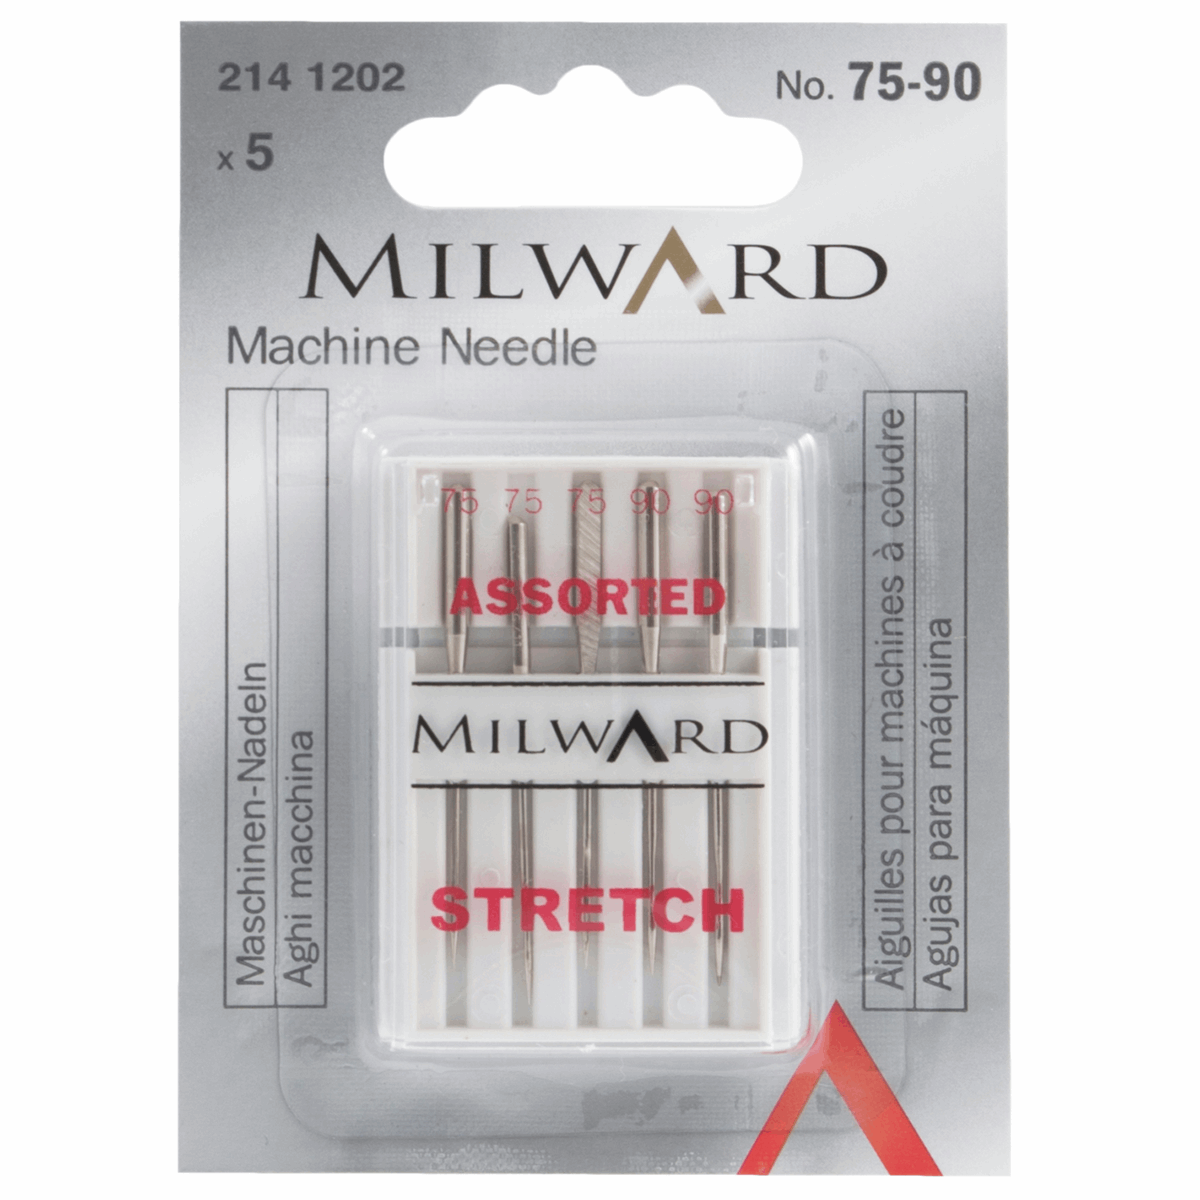 Milward - Sewing Machine Needles - Stretch